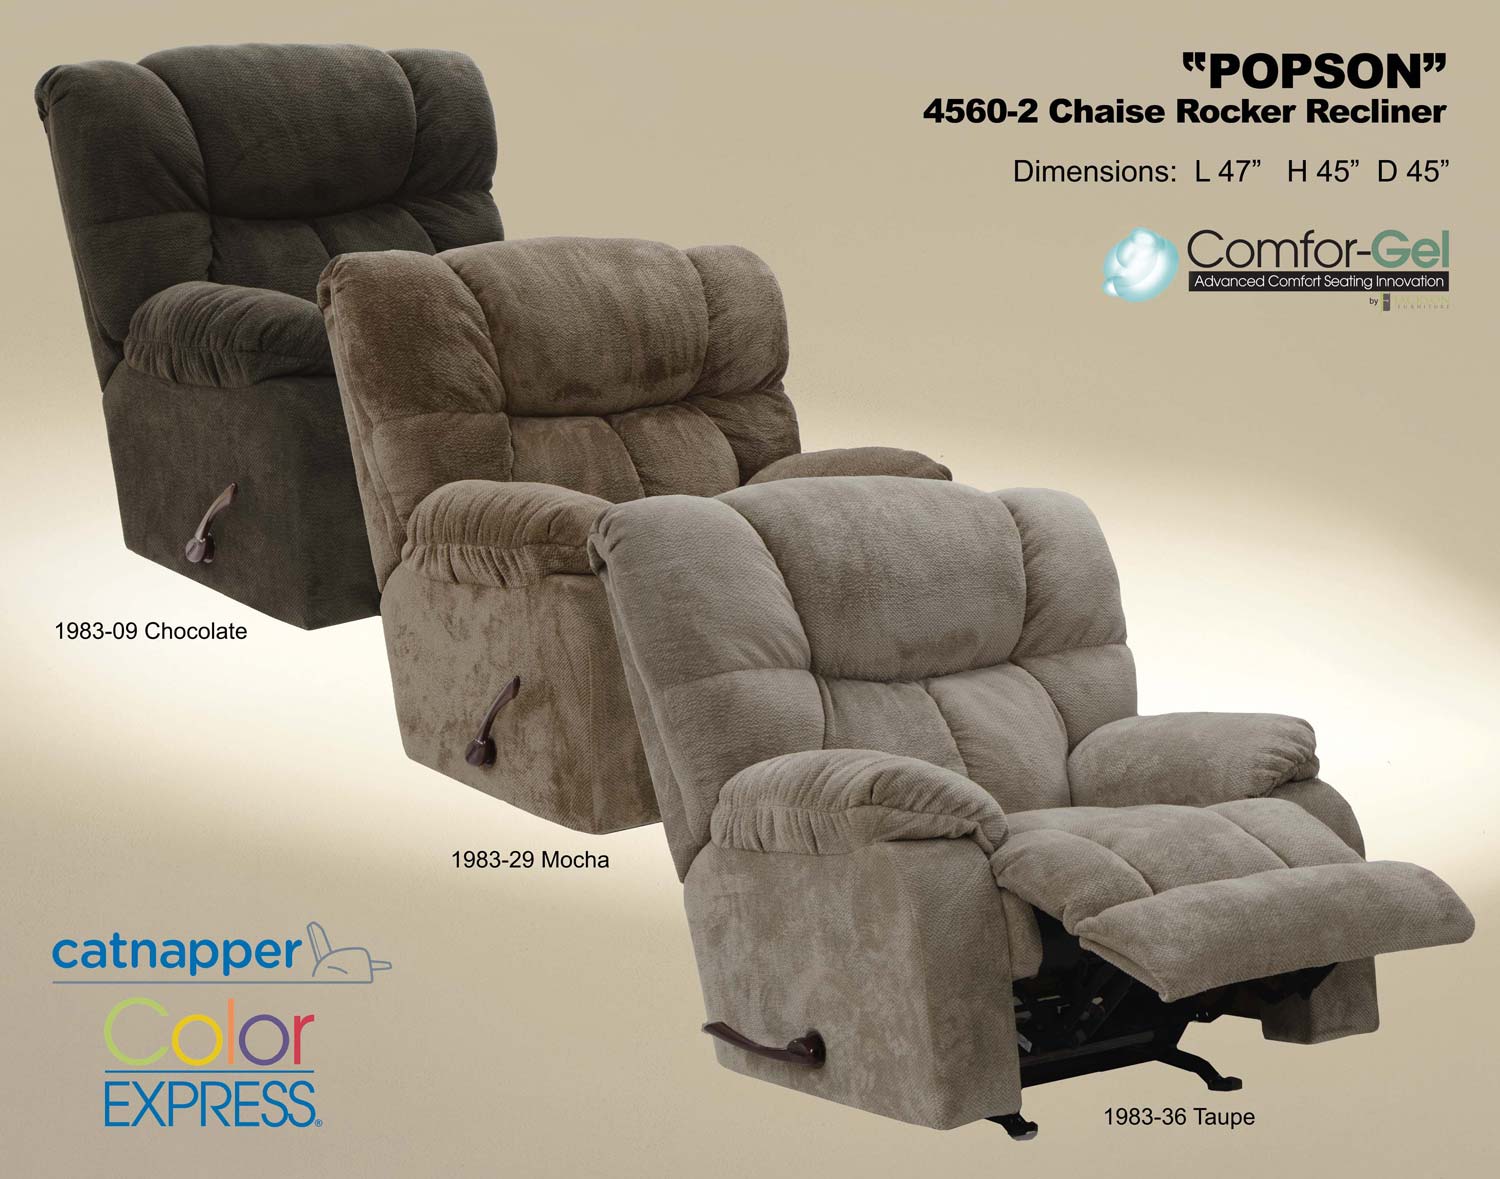 CatNapper Popson X-tra Comfort Chaise Rocker Recliner - Chocolate